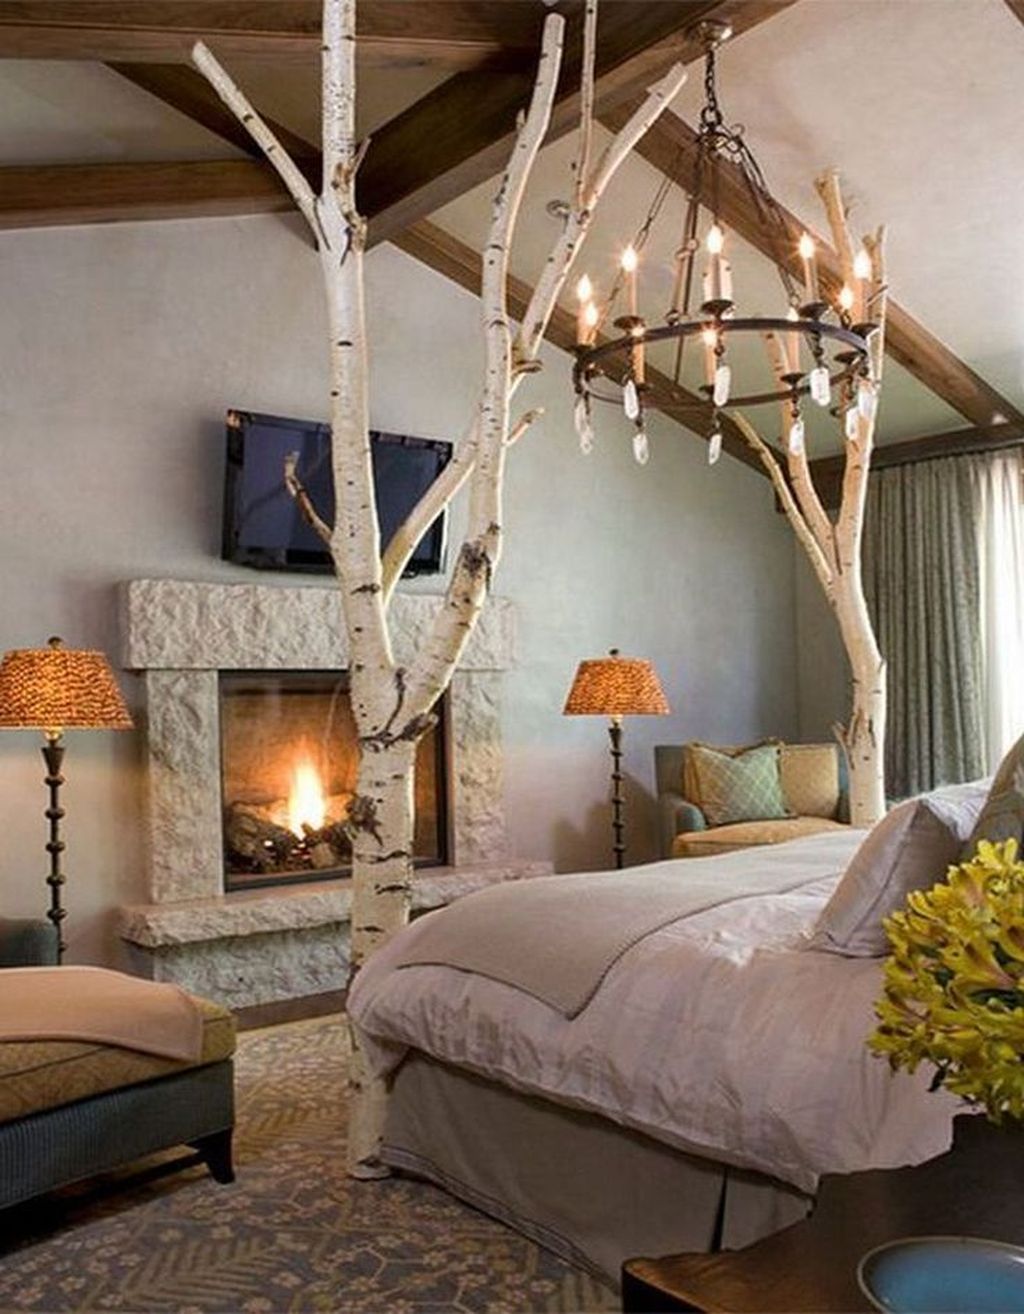 34 Lovely Romantic Bedroom Decor Ideas For Couples - Lovely Romantic BeDroom Decor IDeas For Couples 06